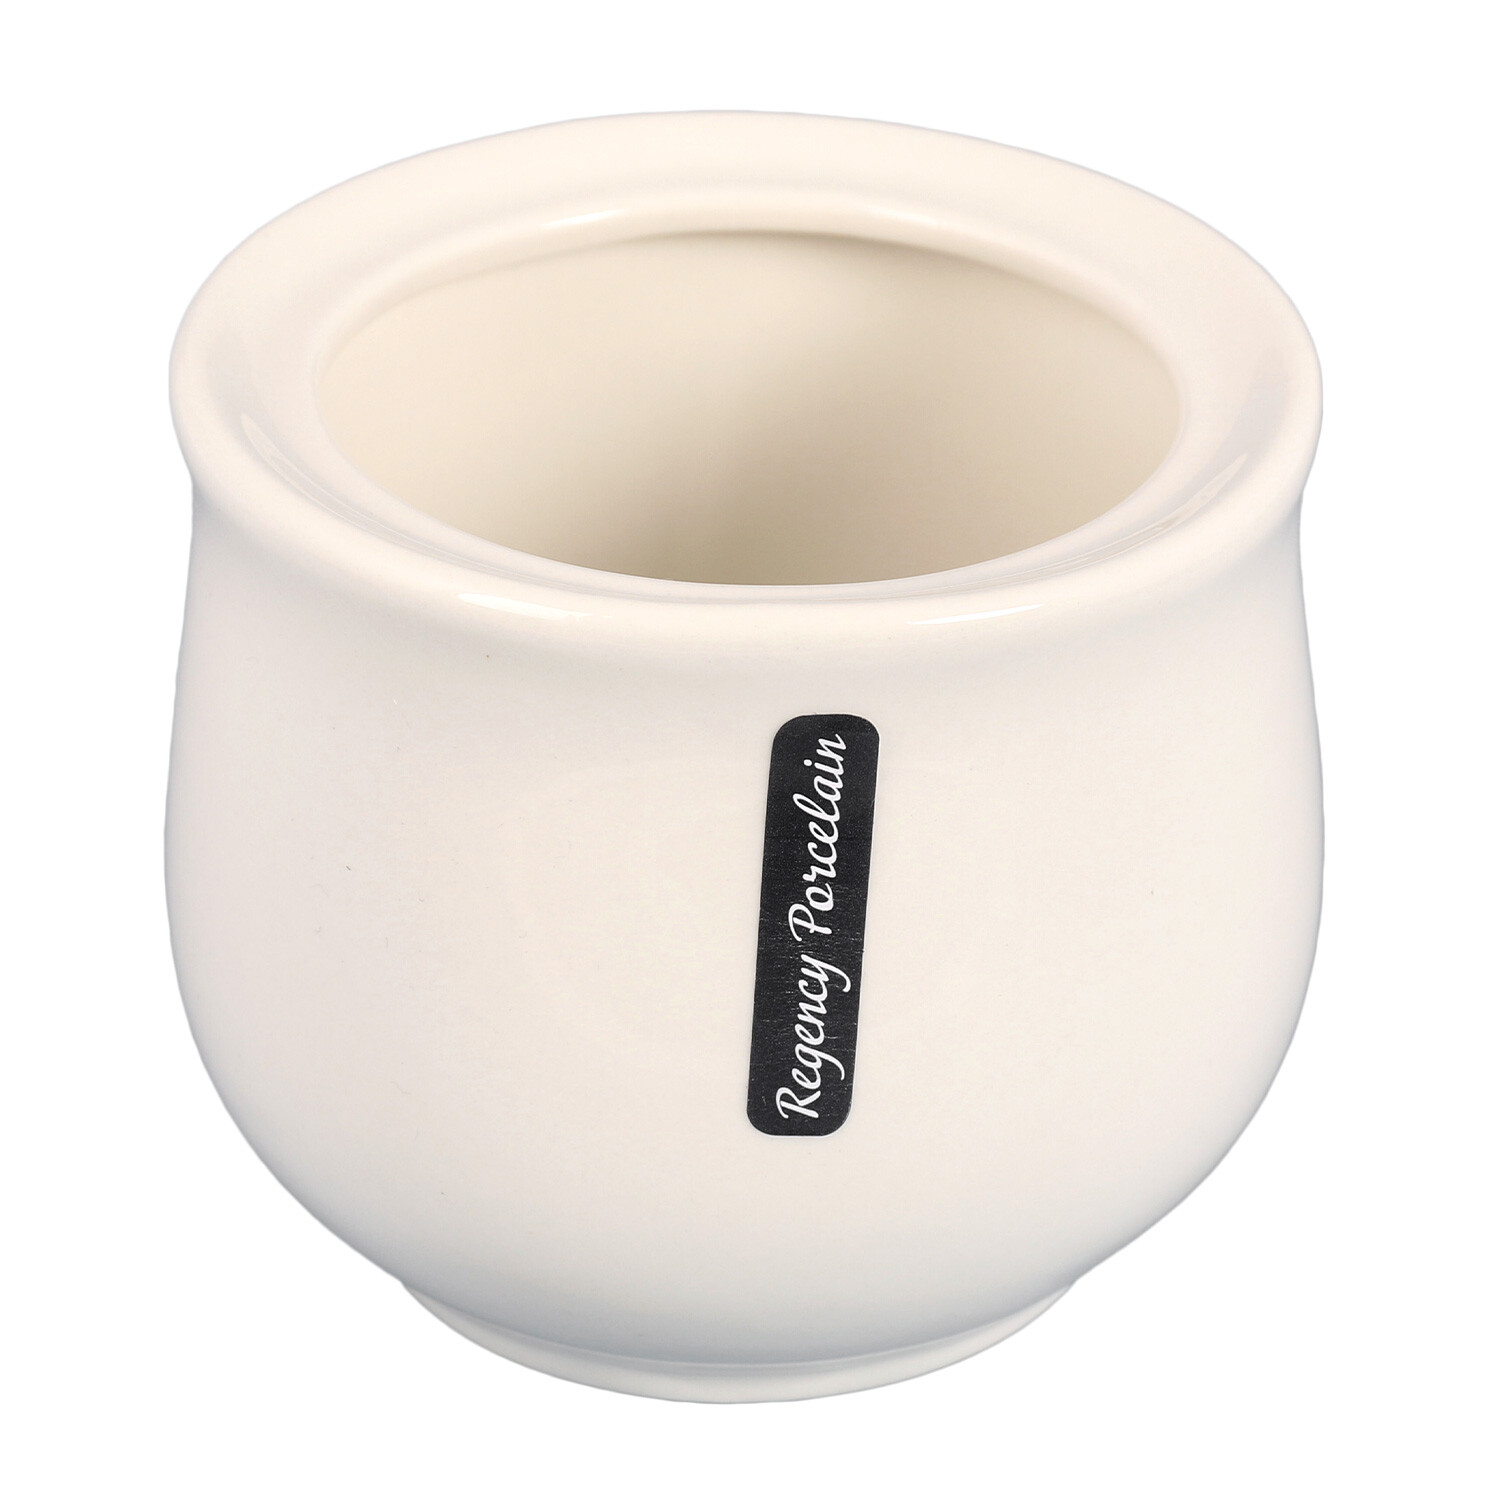 Regency Porcelain Sugar Bowl - White Image 2